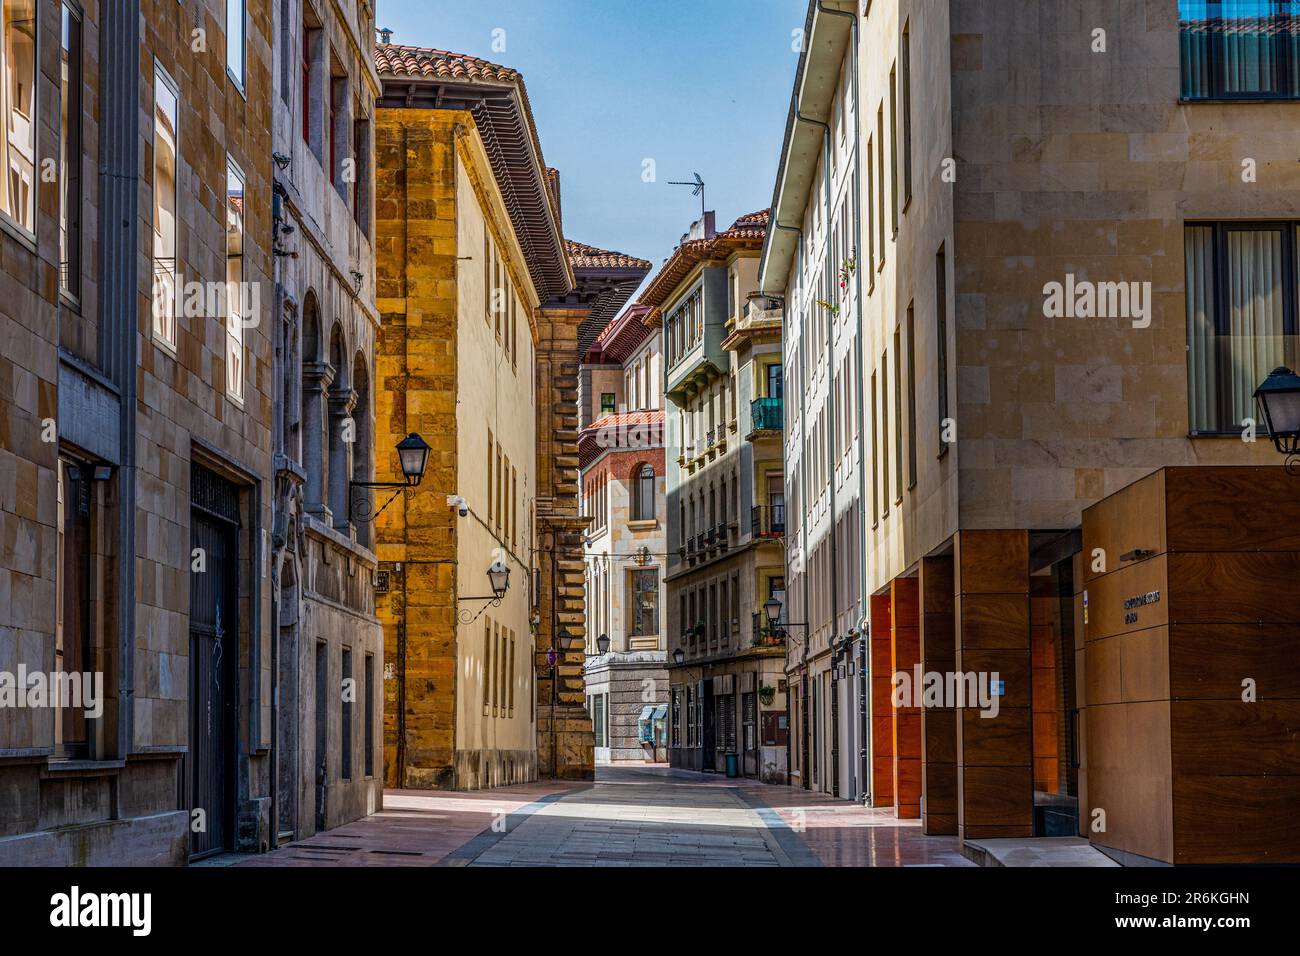 Old town, Oviedo, UNESCO World Heritage Site, Asturias, Spain, Europe Stock Photo